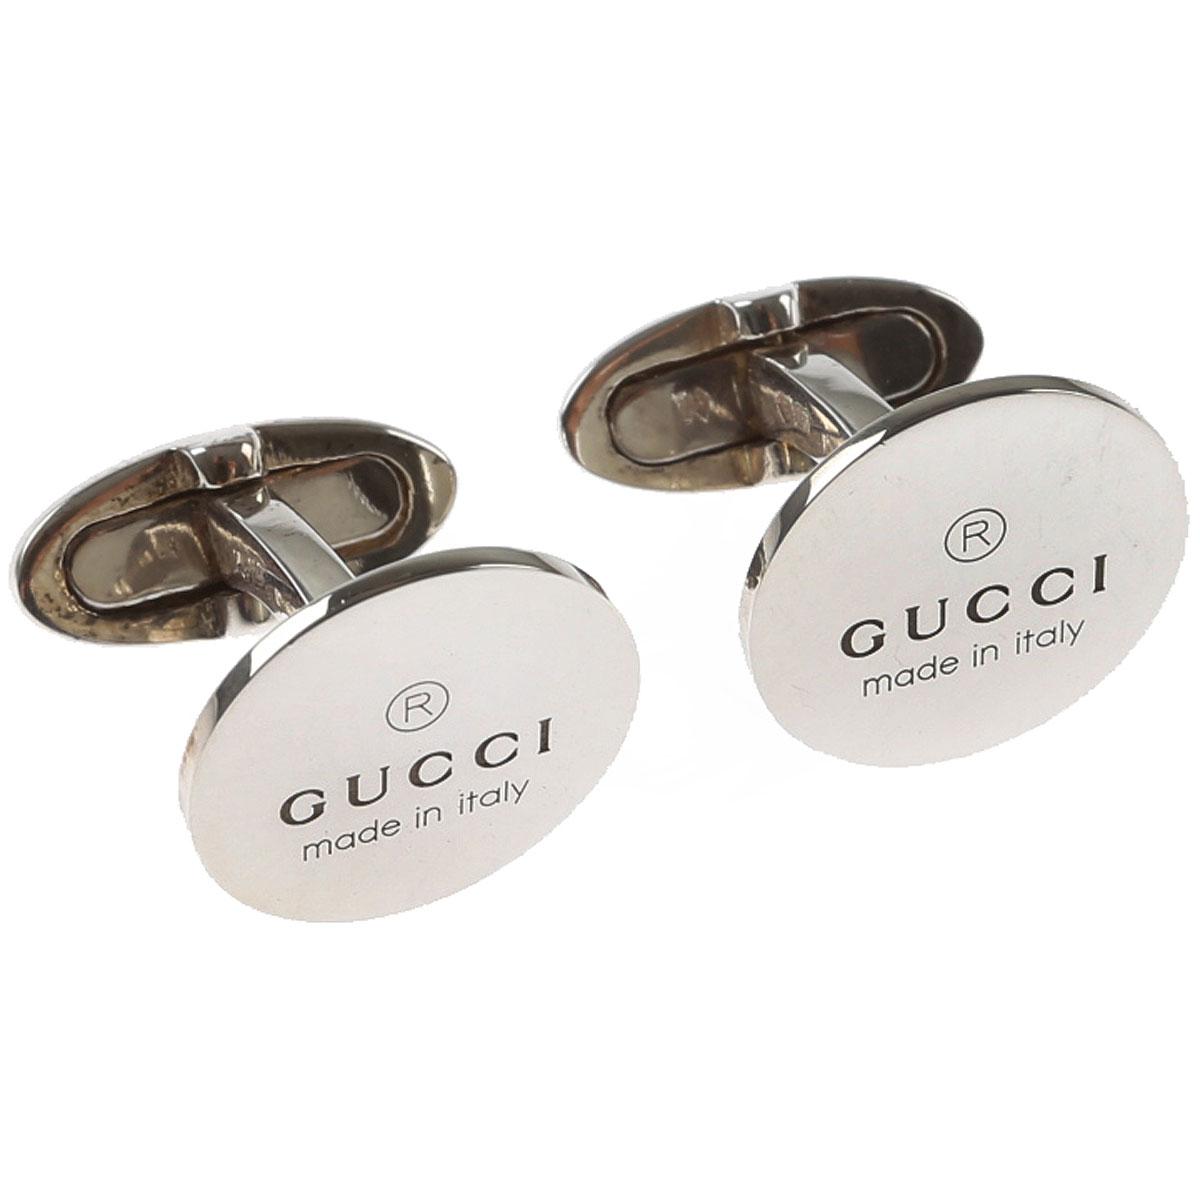 Gucci Cufflinks For Men On Sale in 